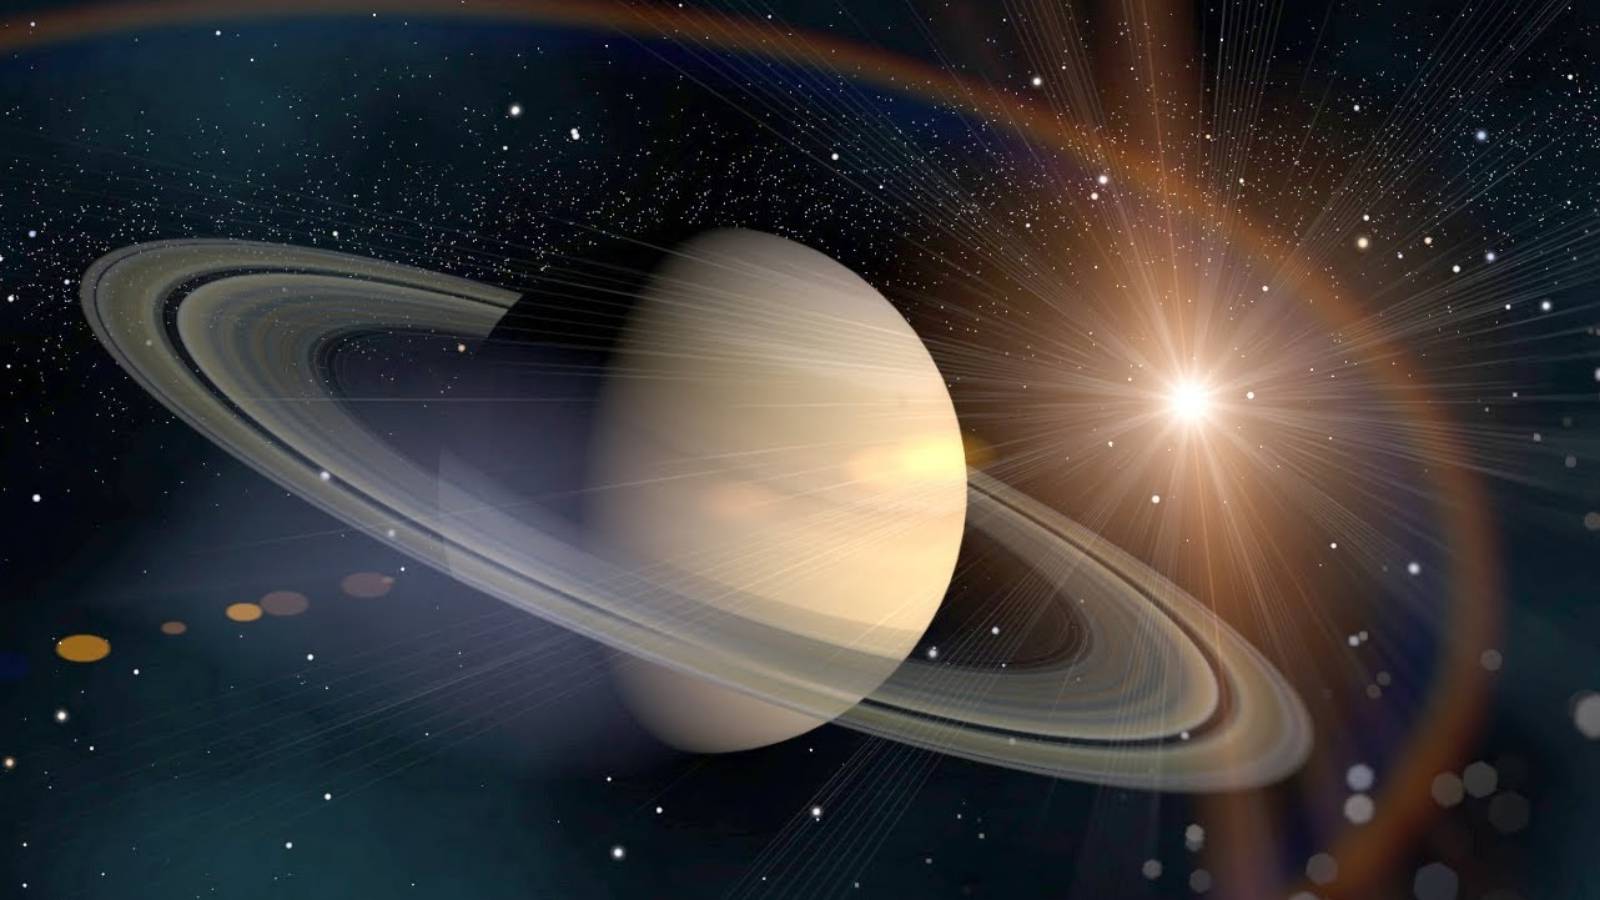 Planeta libélula Saturno